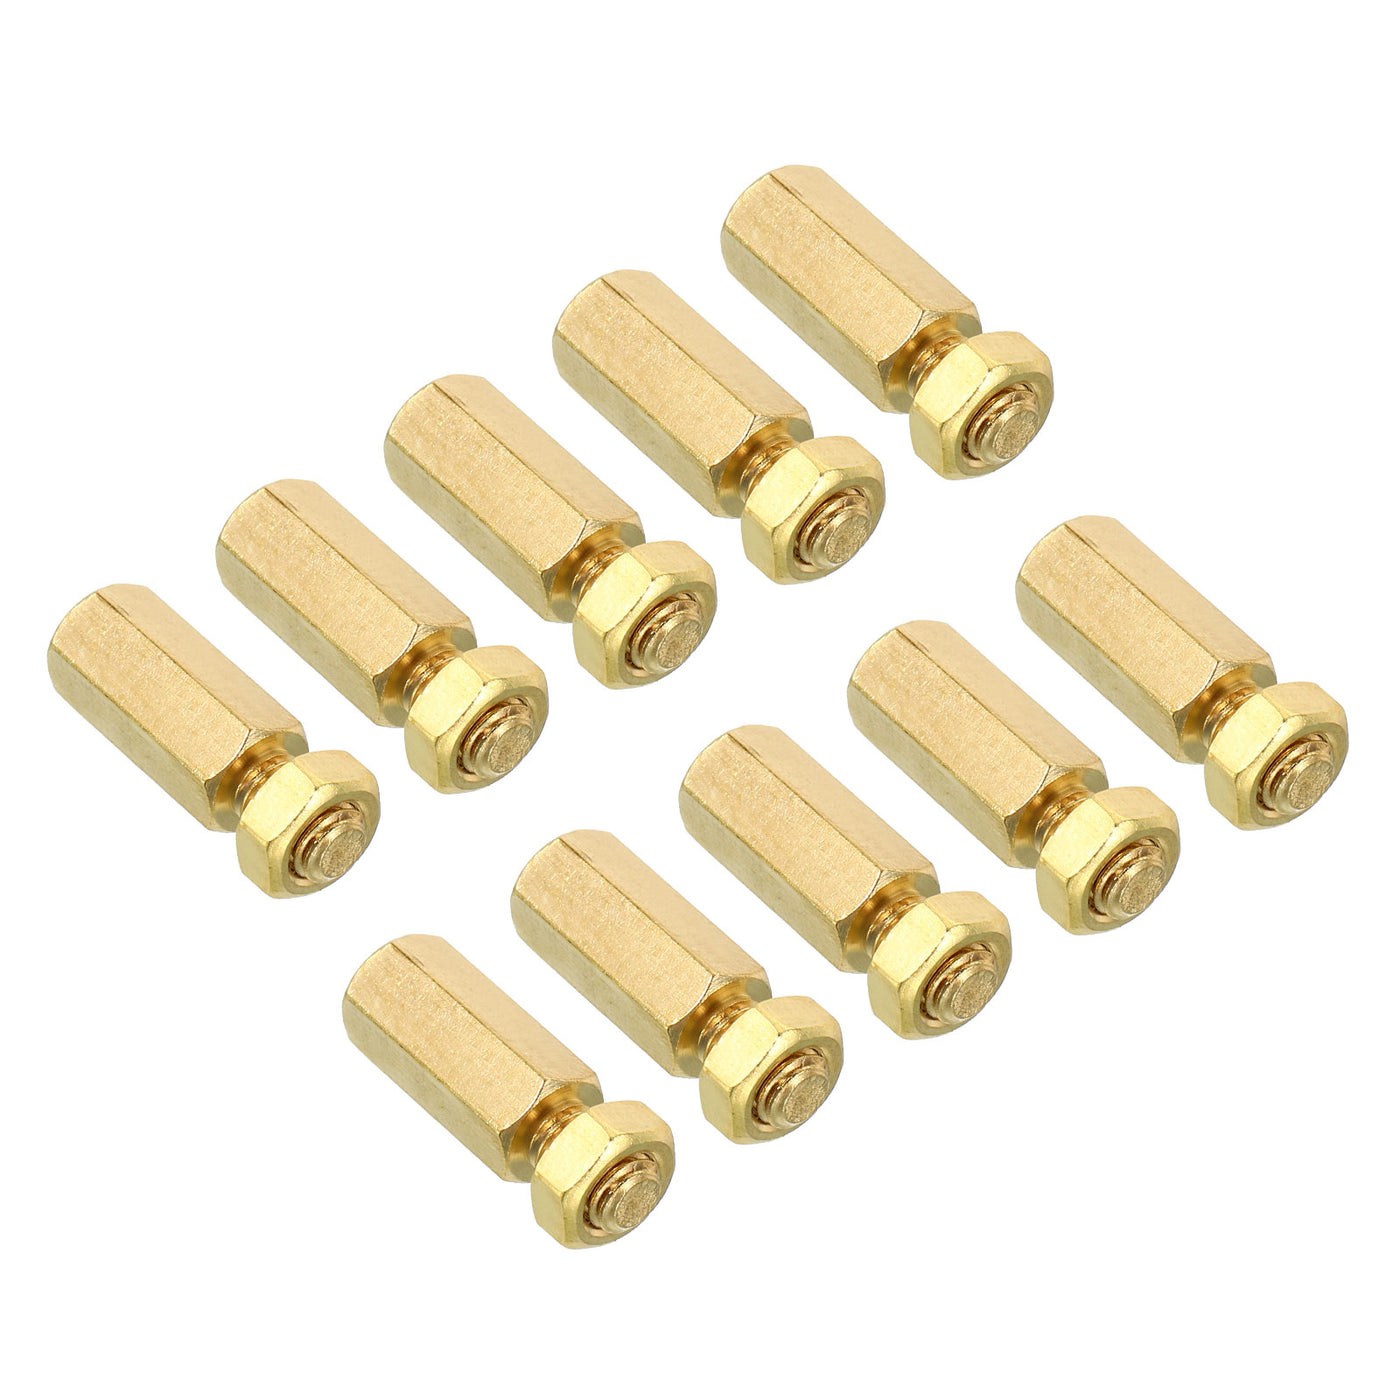 Harfington 15mm+6mm M5 Standoff Screws 20 Pack Brass Hex PCB Standoffs Nuts Gold Tone